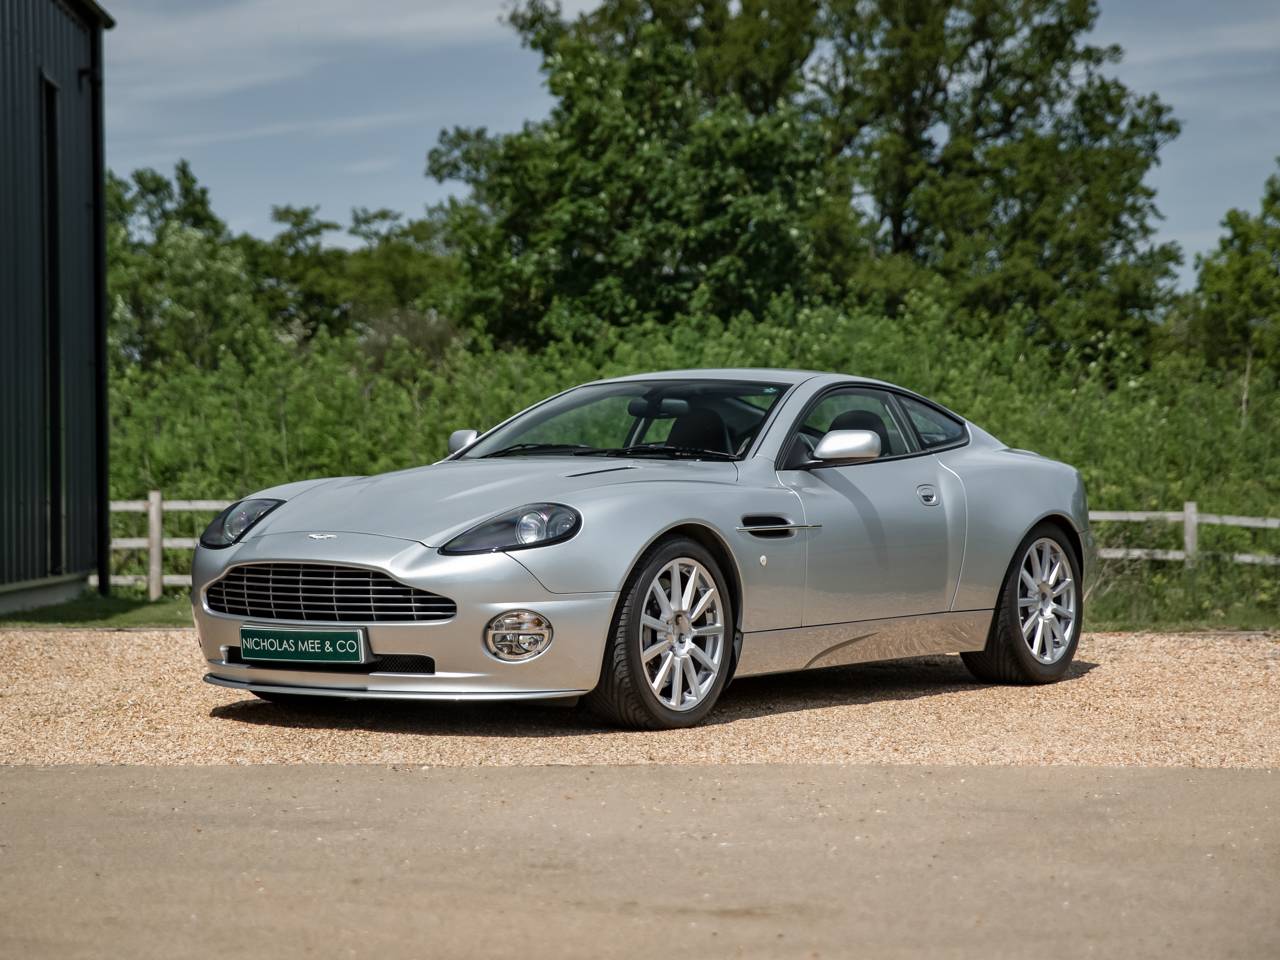 For Sale: Aston Martin V12 Vanquish S (2005) offered for GBP 115,000